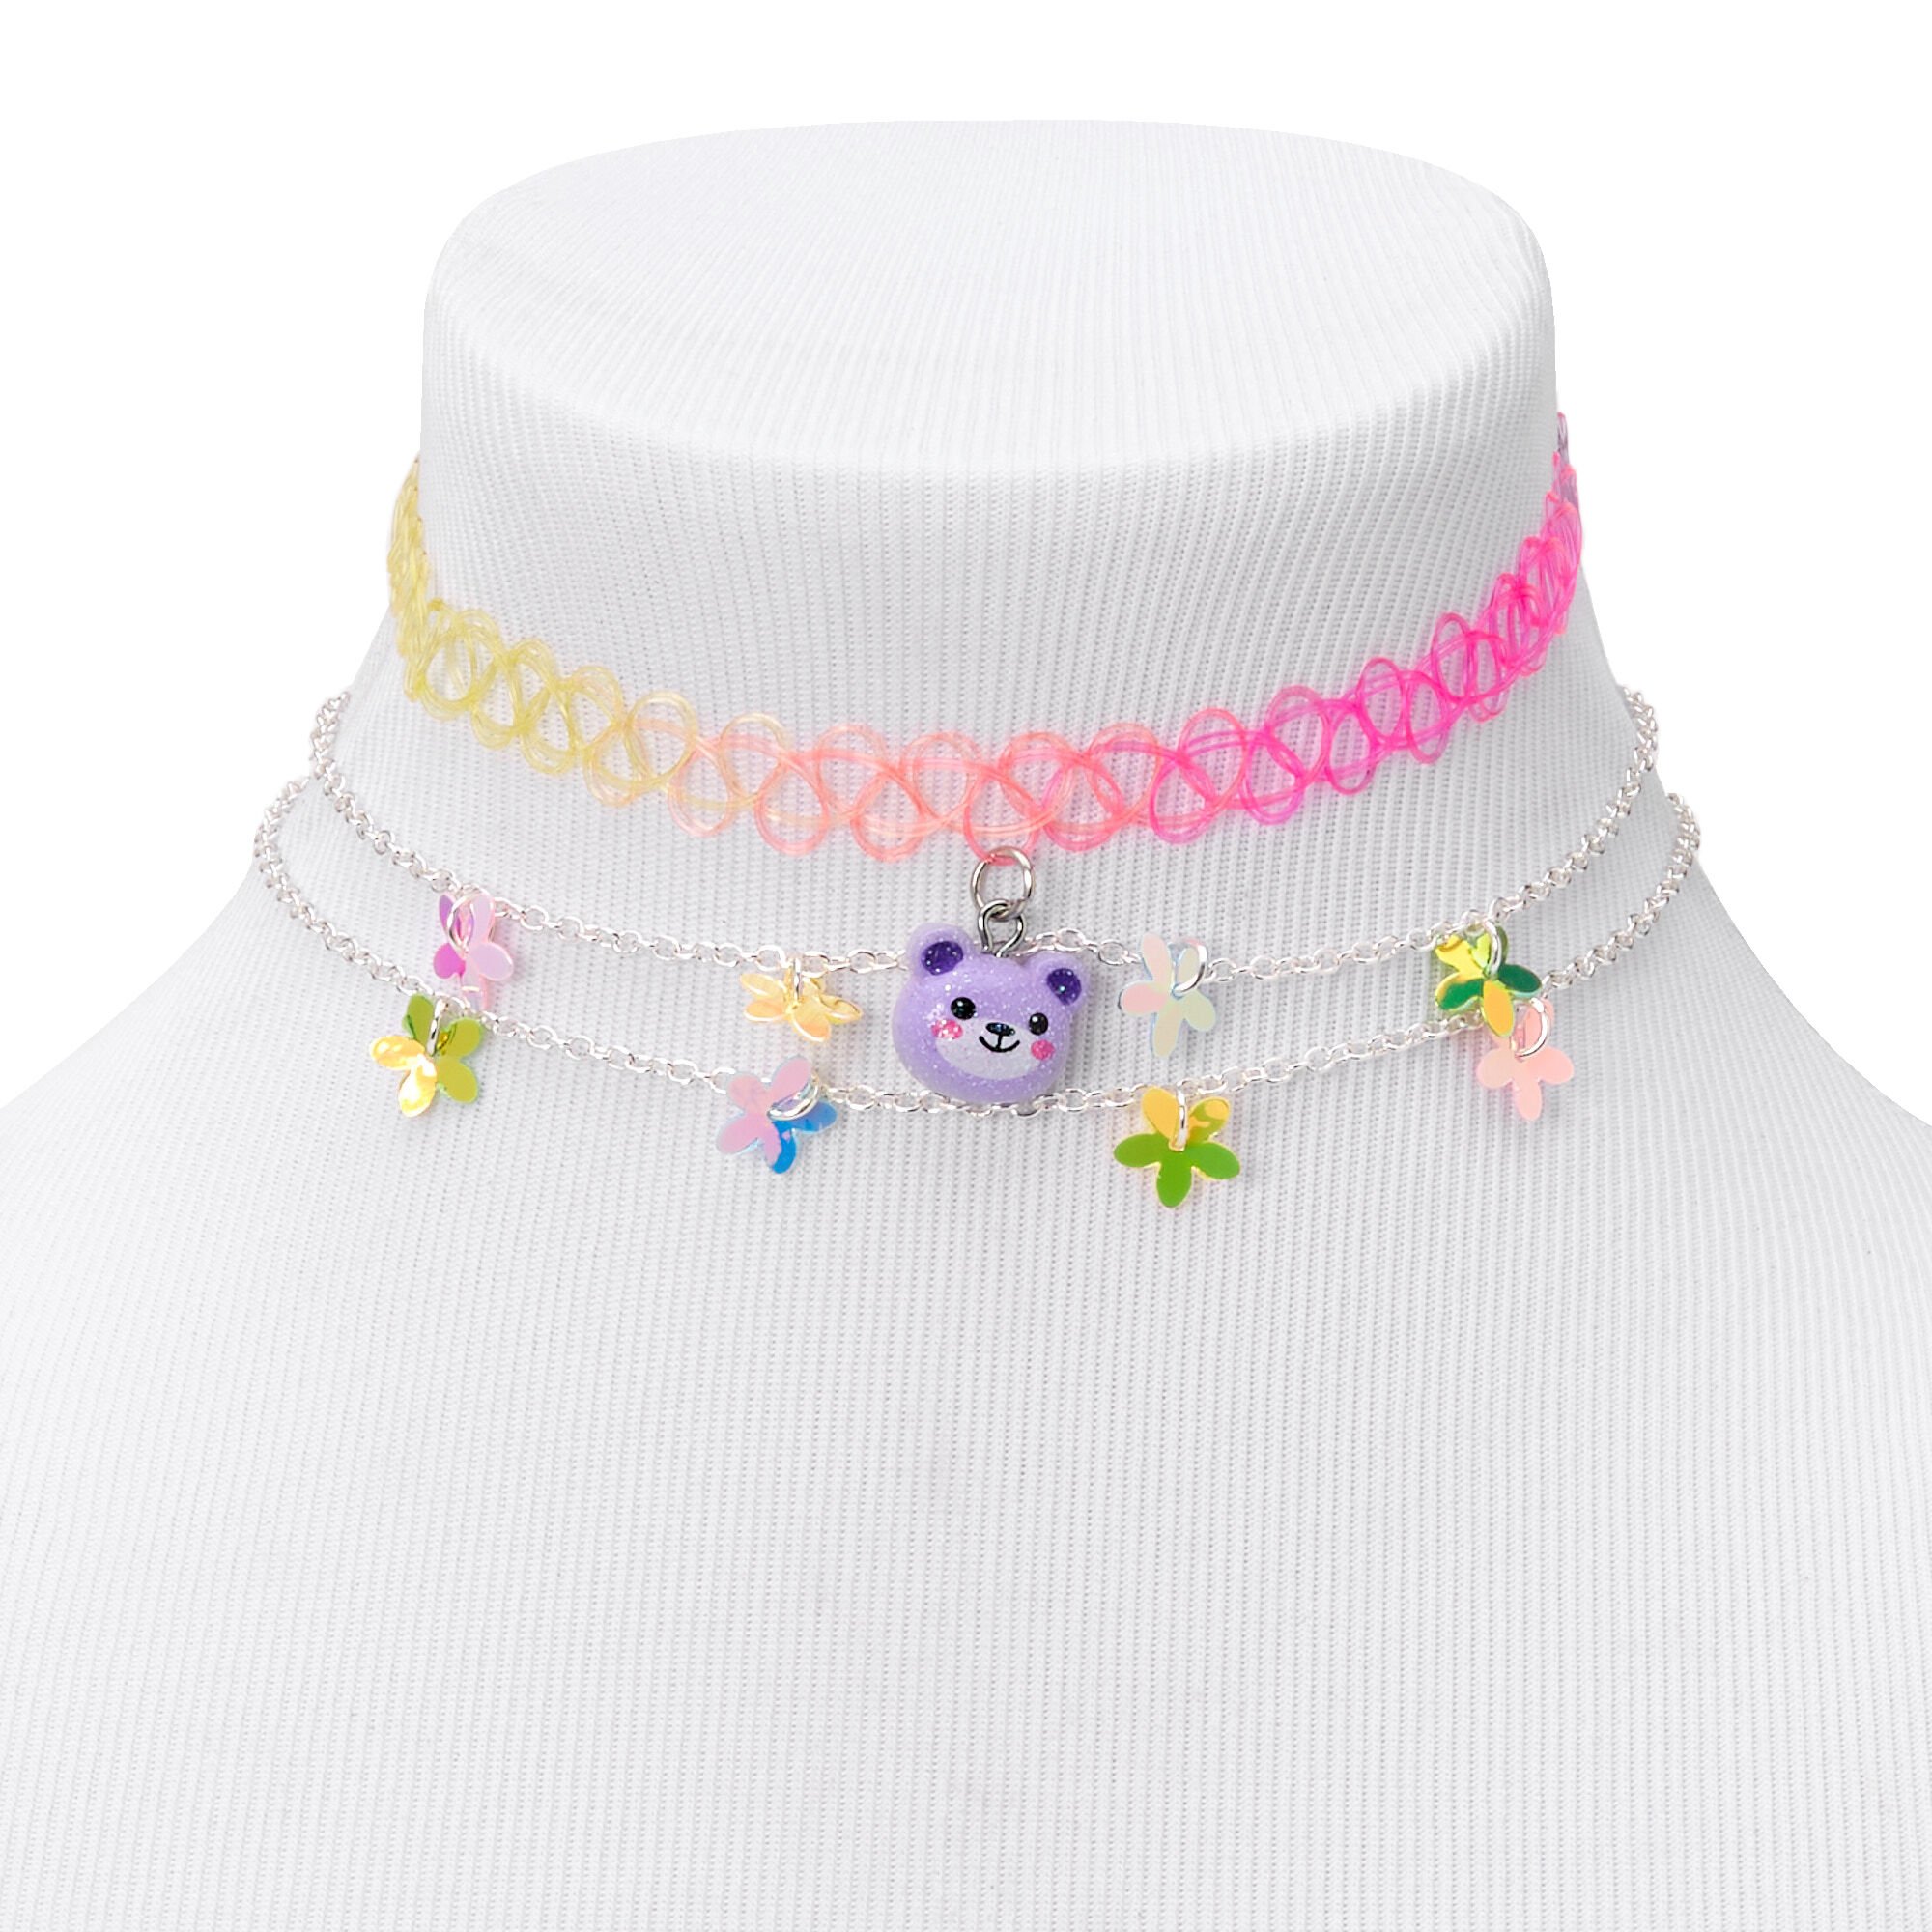 Claire's Club Purple Bear Choker Necklaces - Pack